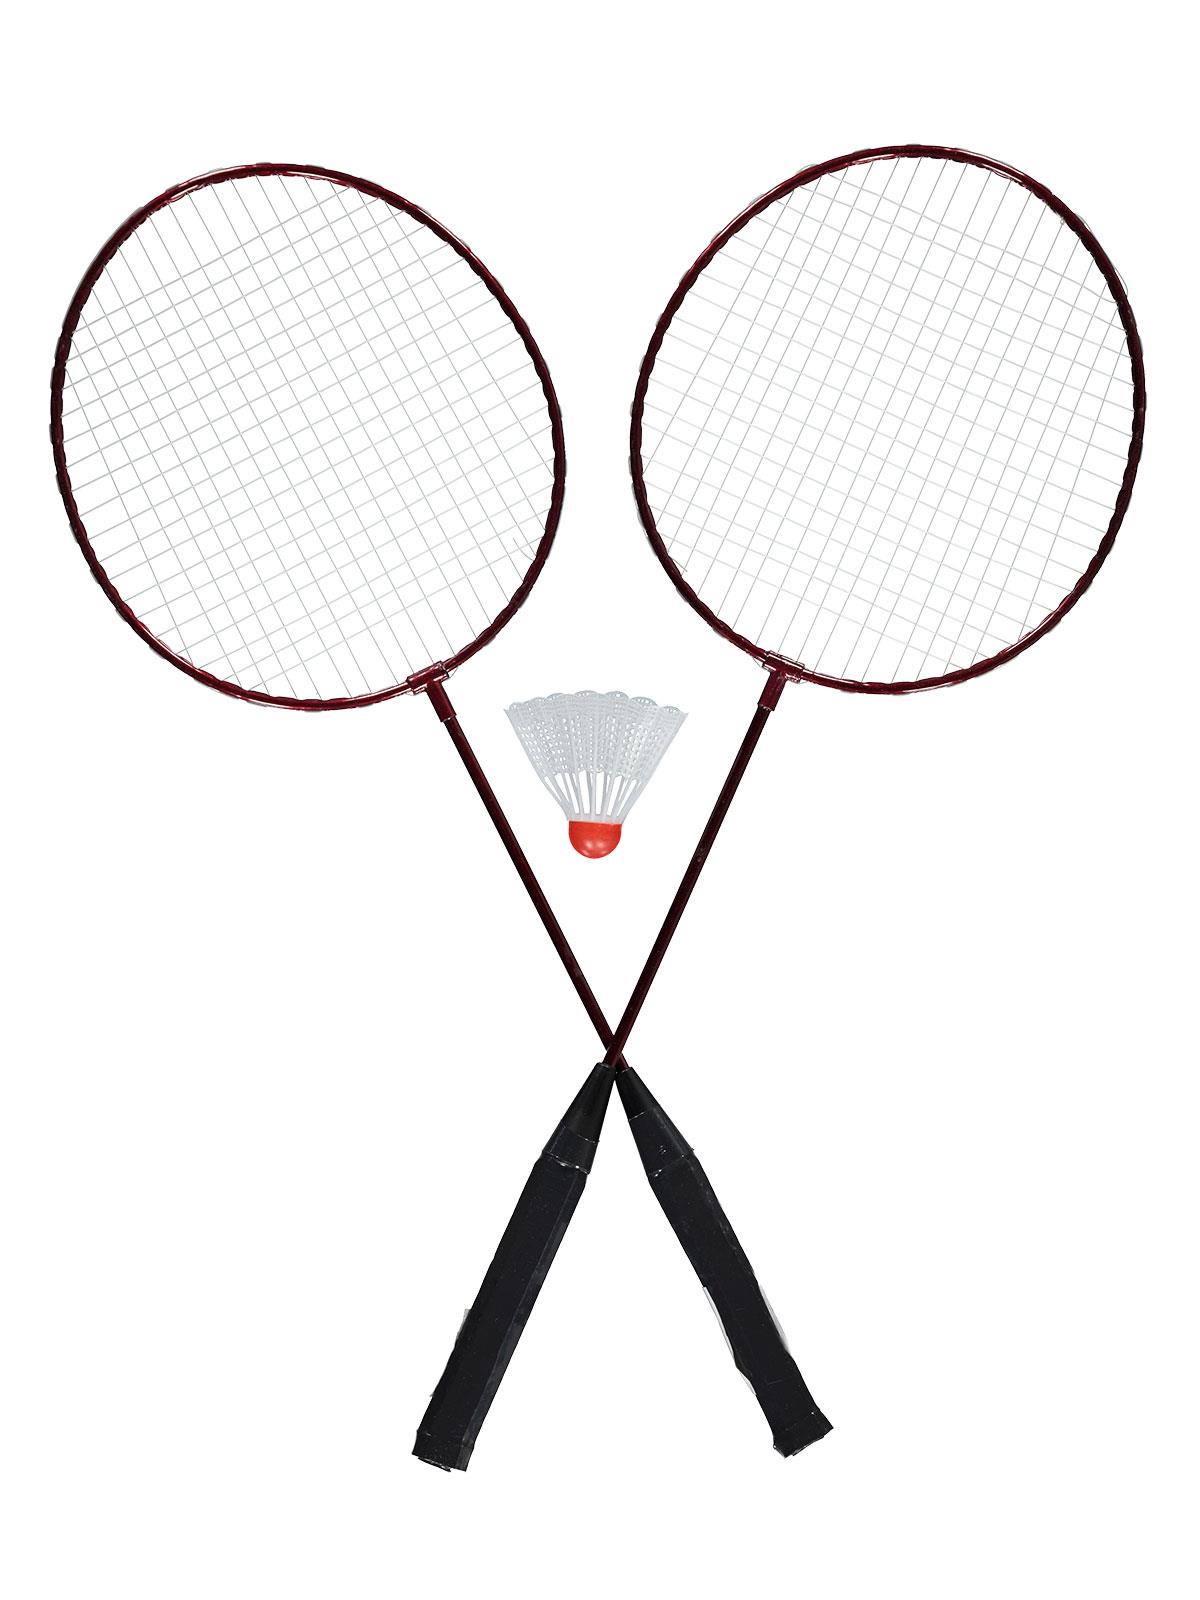 Can Oyuncak Fileli Badminton Bordo